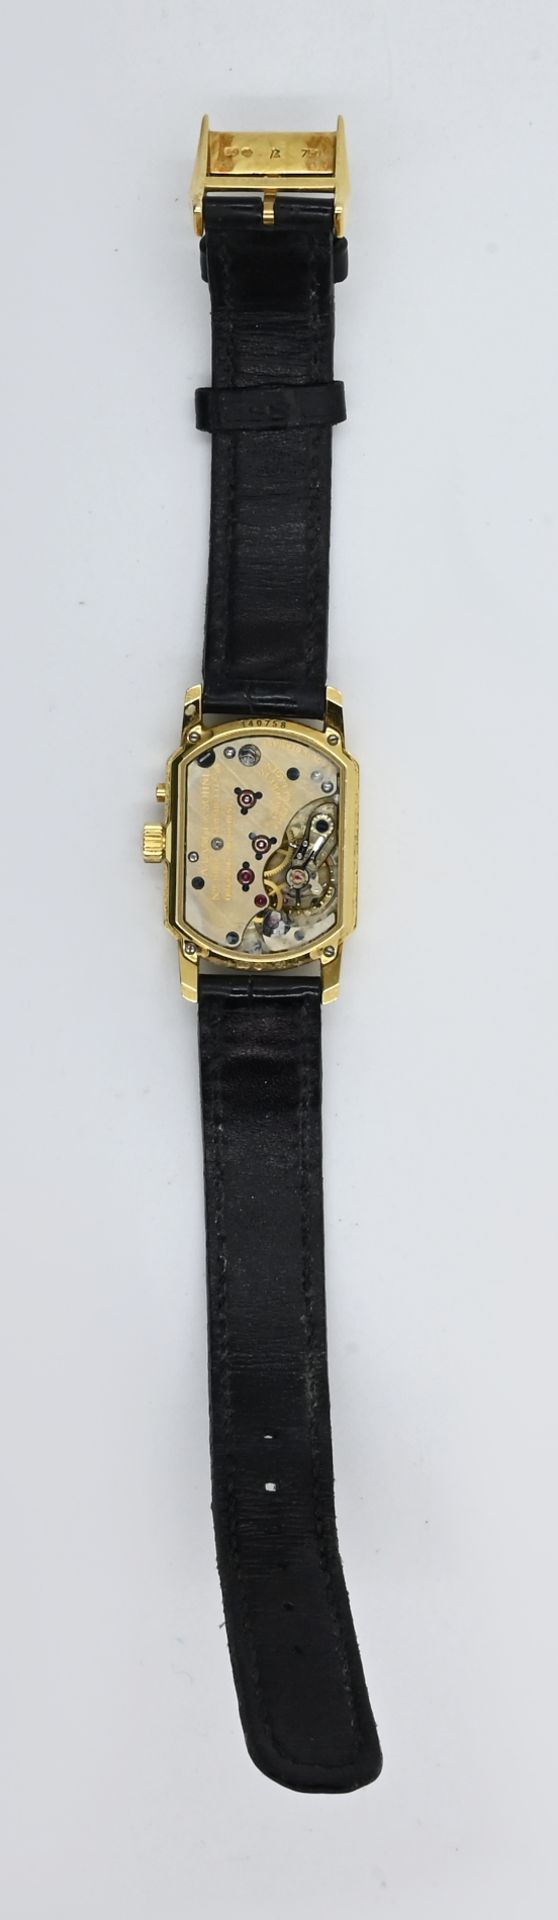 1 Damenarmbanduhr A. LANGE & SÖHNE GG 18ct., mit Original-Lederarmband, Uhr läuft an, Originalschatu - Bild 2 aus 3